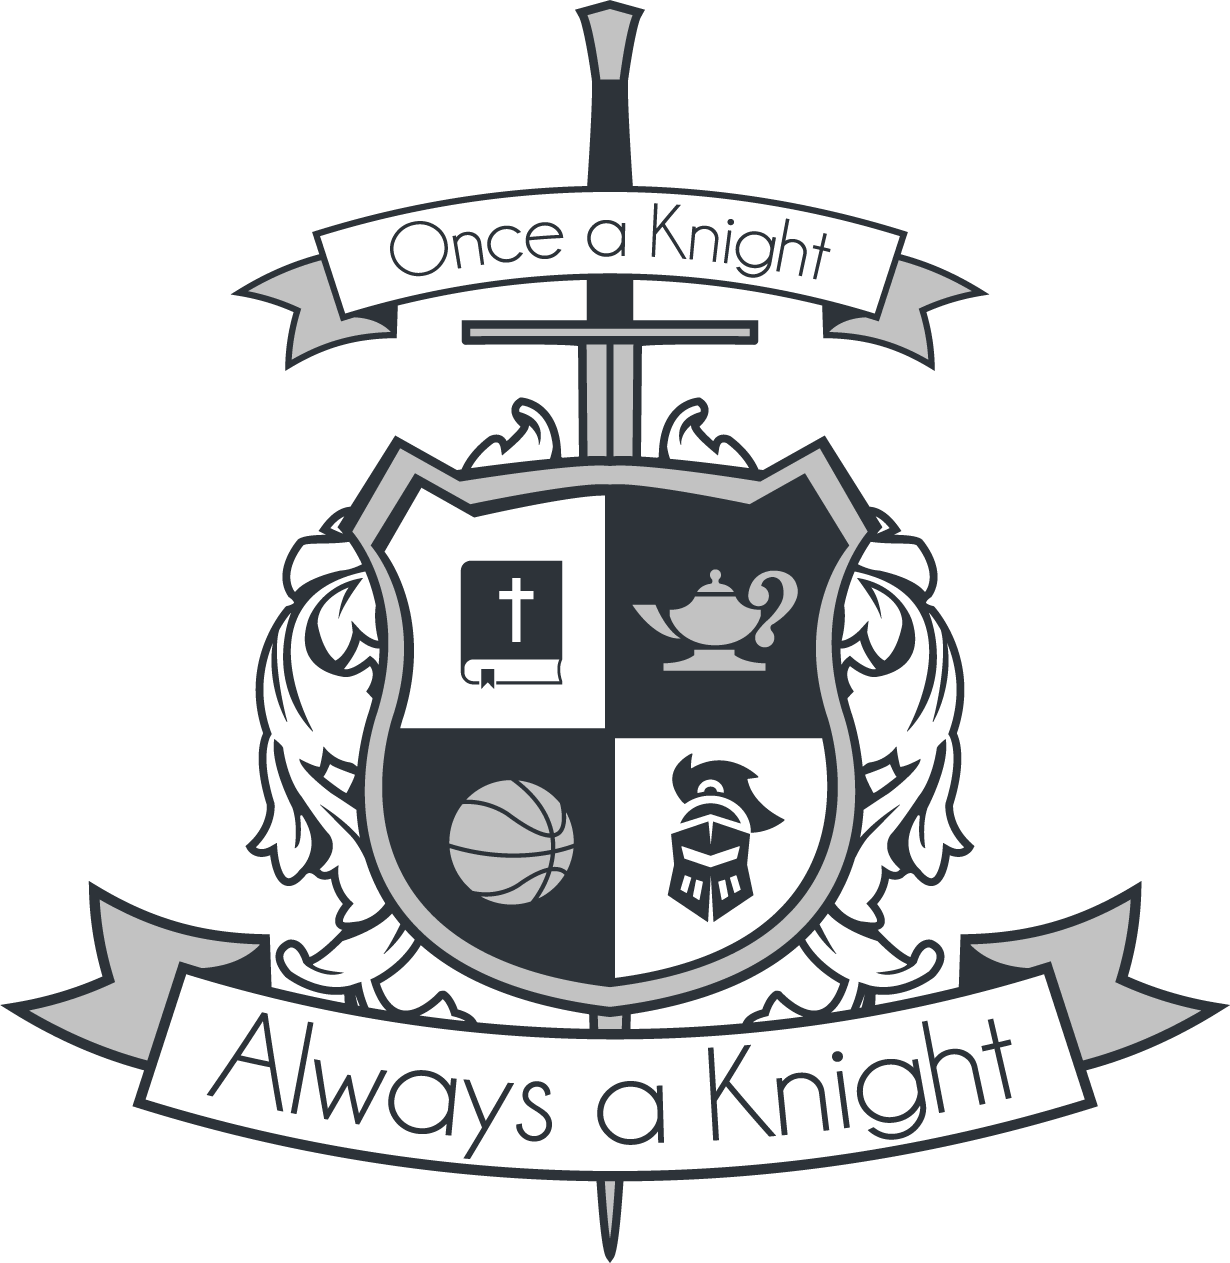 Lighthouse Christian School crest logo | Always a Knight